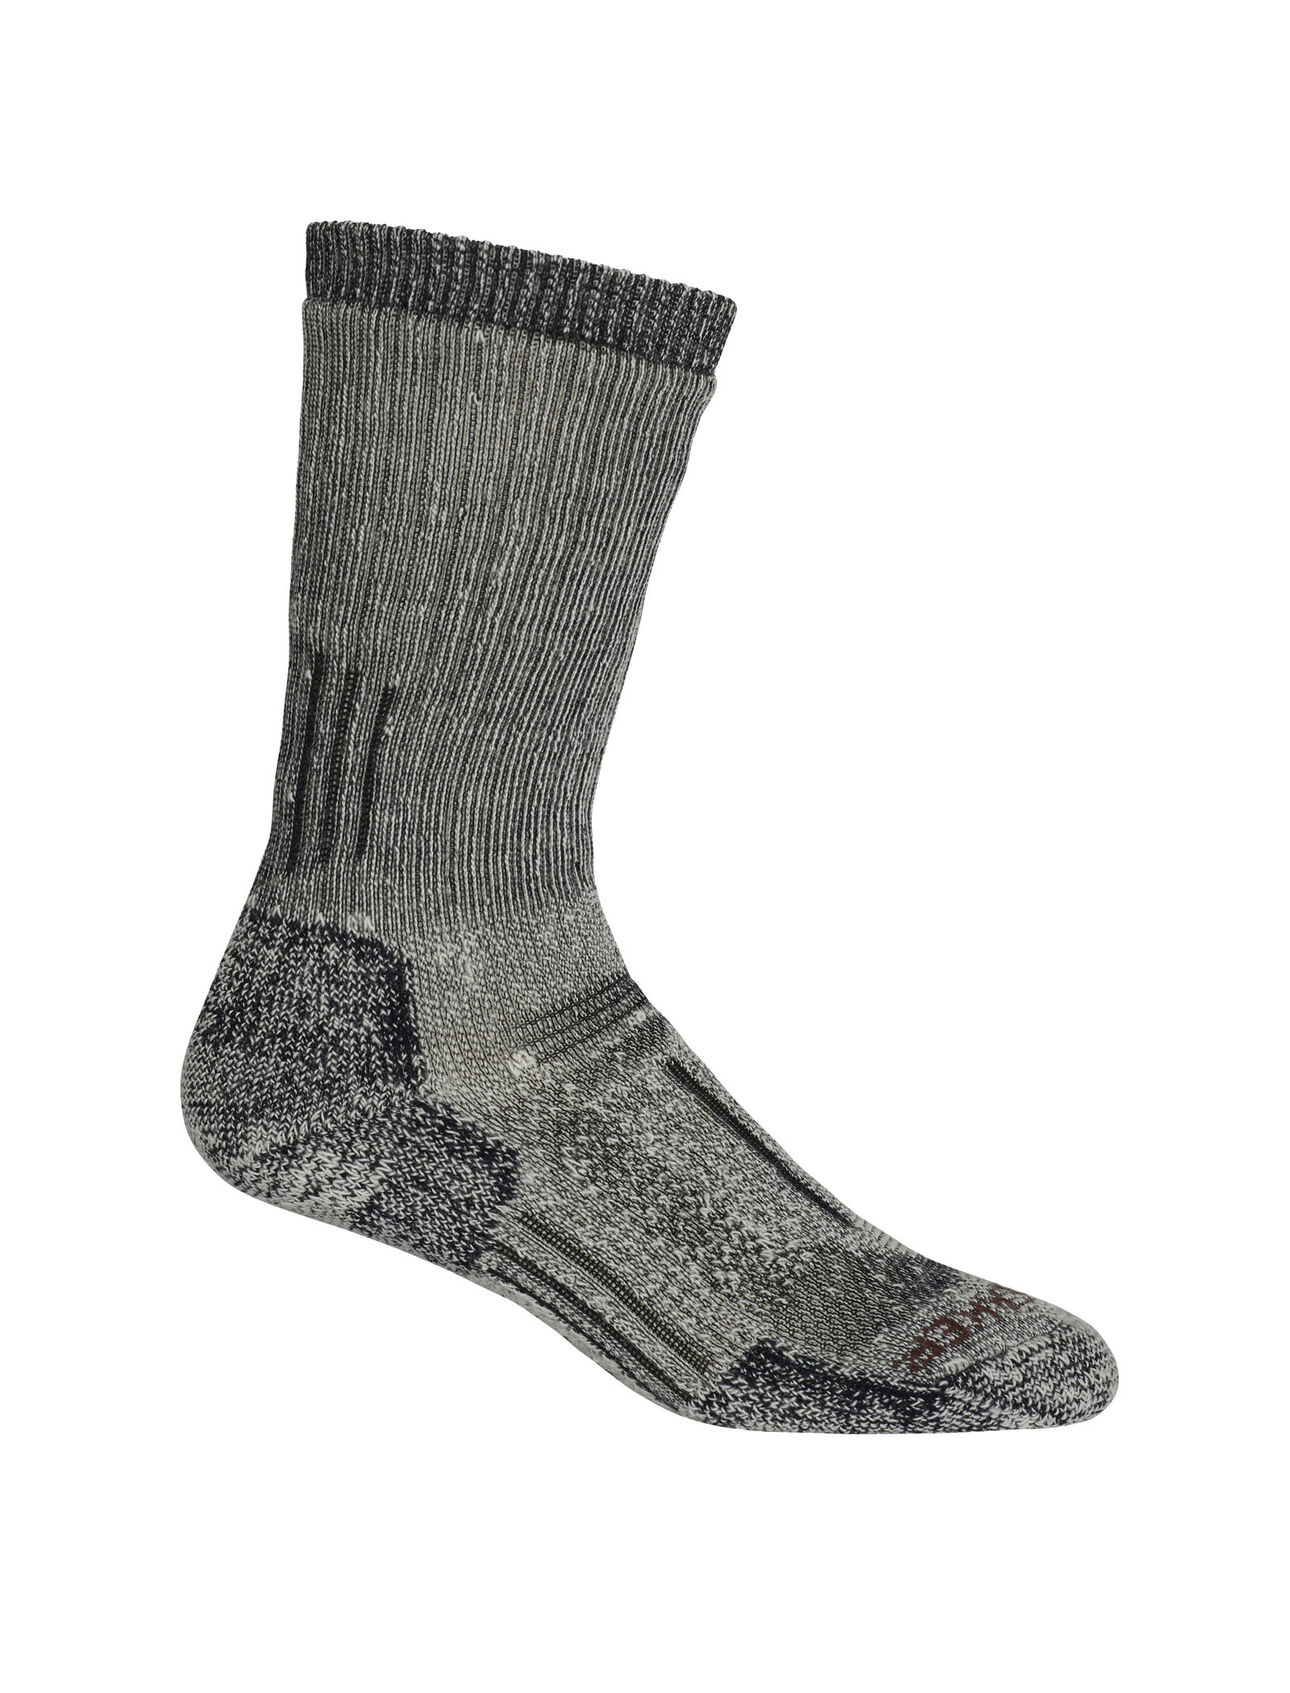 Merino Mountaineer Mid Calf Socks